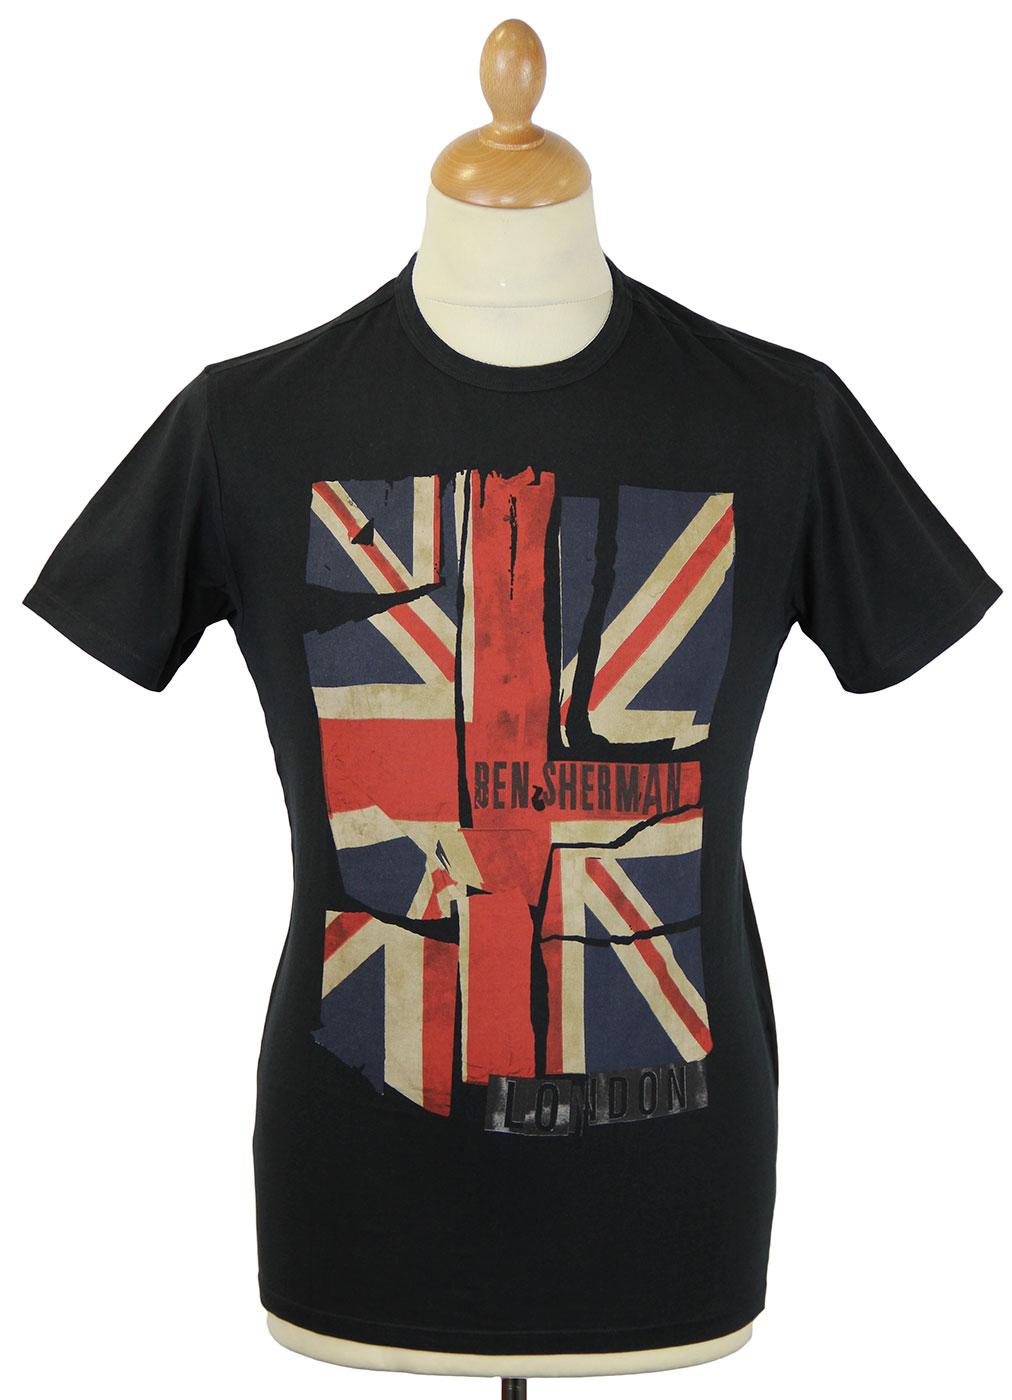 Union Jack BEN SHERMAN Retro Mod Pop Art T-shirt